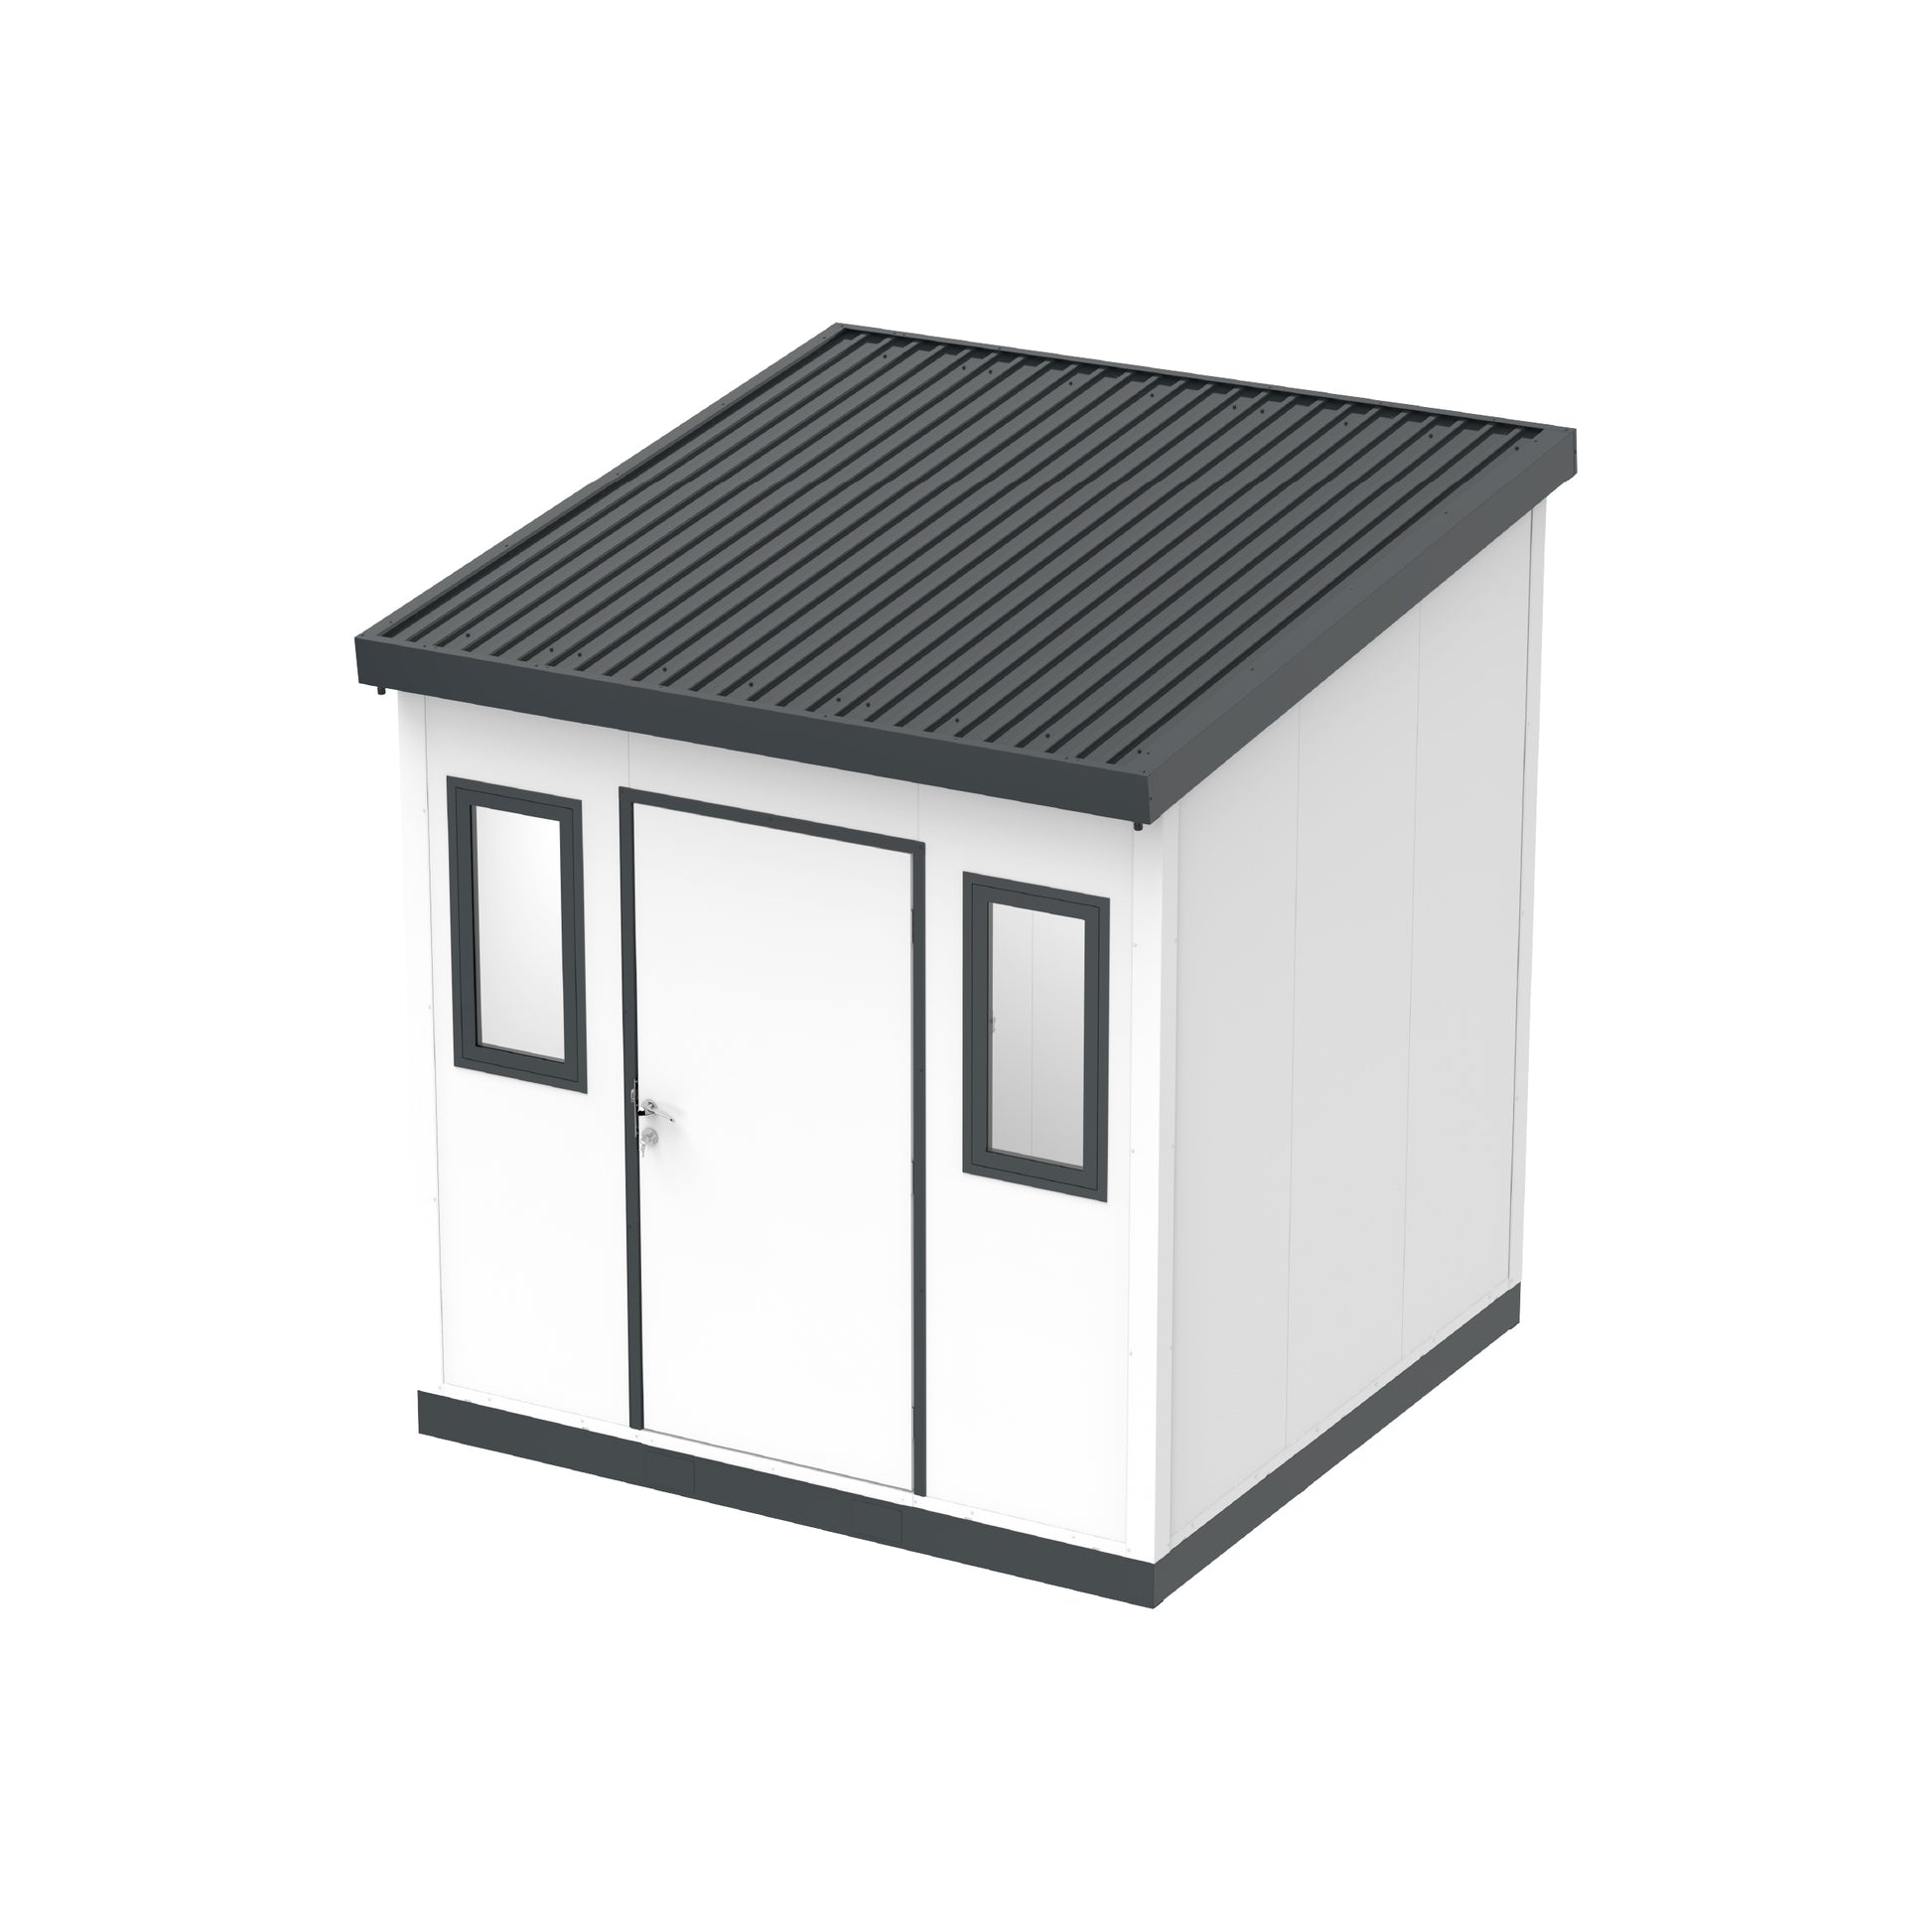 BOSS Homes 8.5x8.5ft Prefabricated Tiny House- Cosmoplast UAE